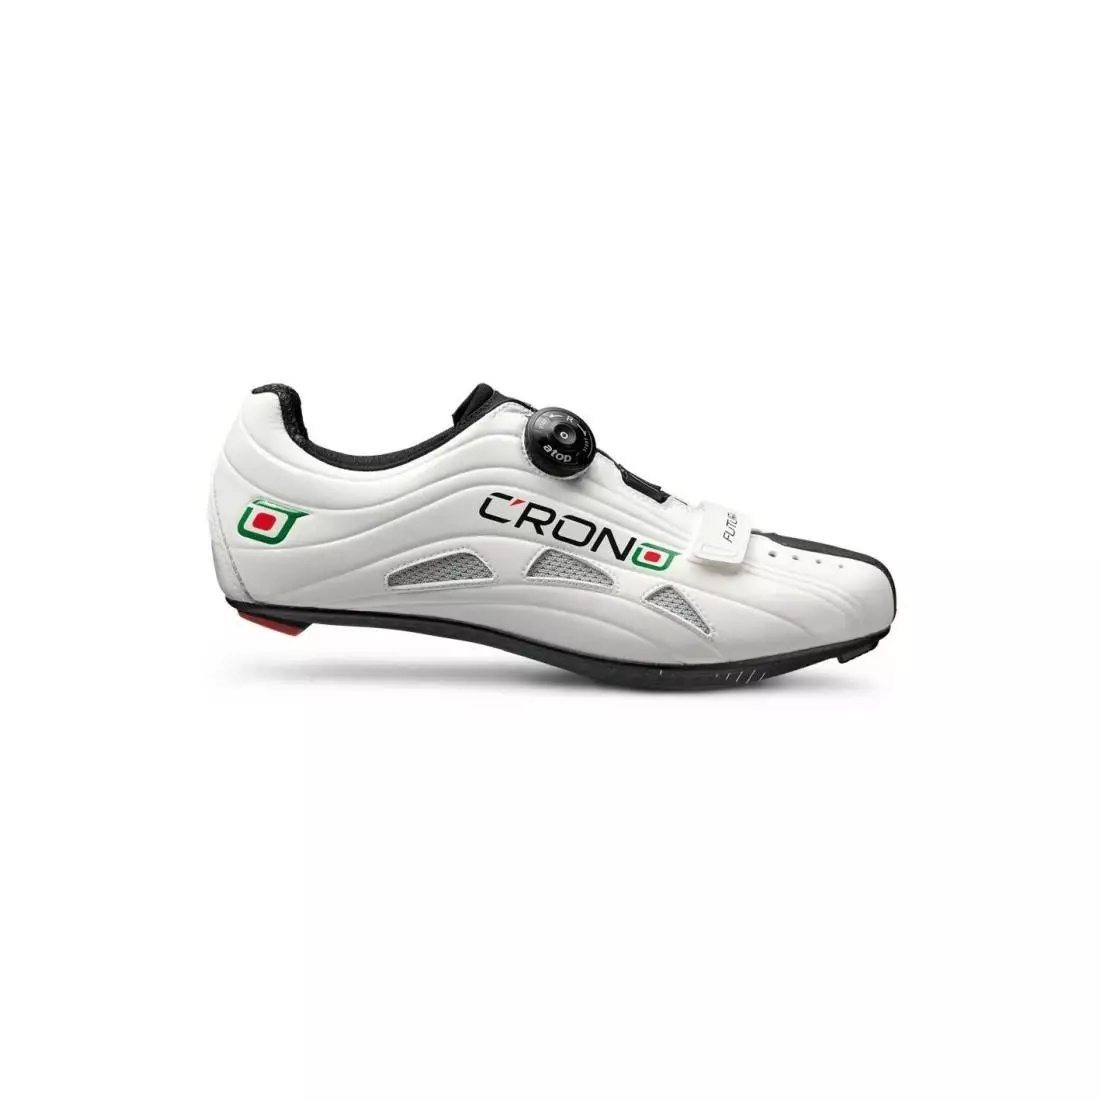 CRONO FUTURA NYLON - pantofi de ciclism rutier - culoare: Alb